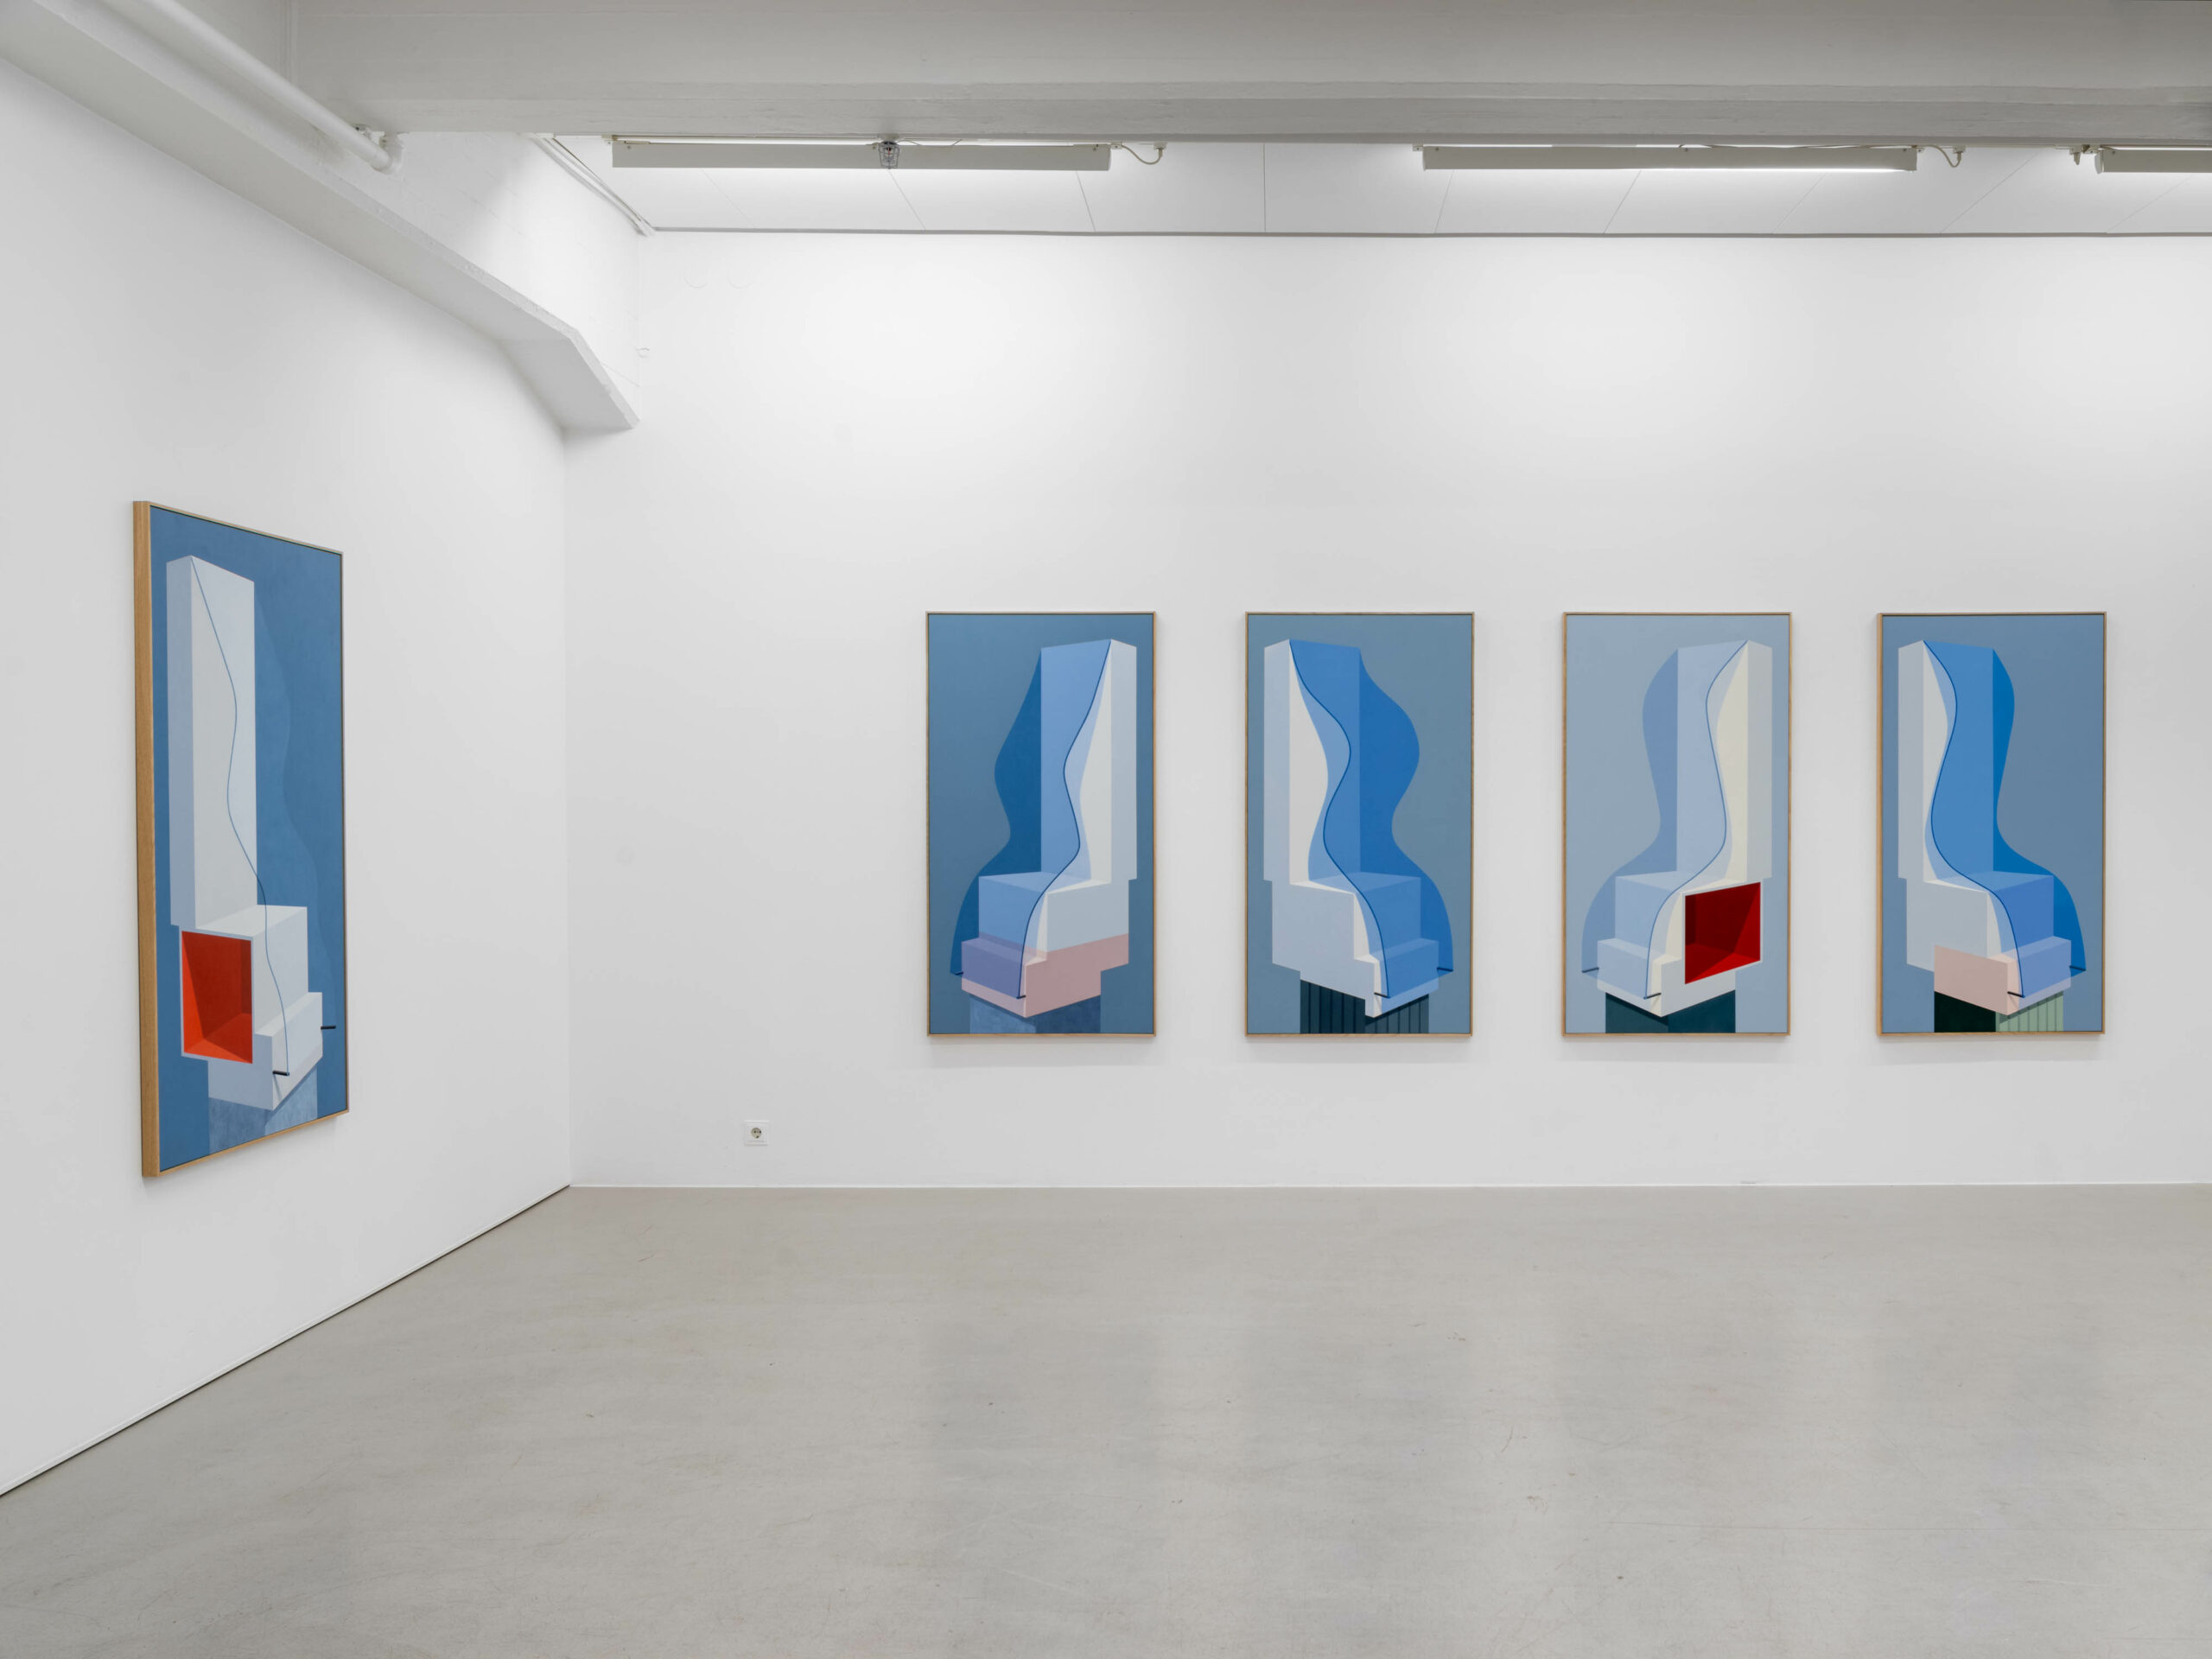 Installation view, Elin Odentia, The Waves, 2020, Cecilia Hillström Gallery. Photo: Jean-Baptiste Béranger  